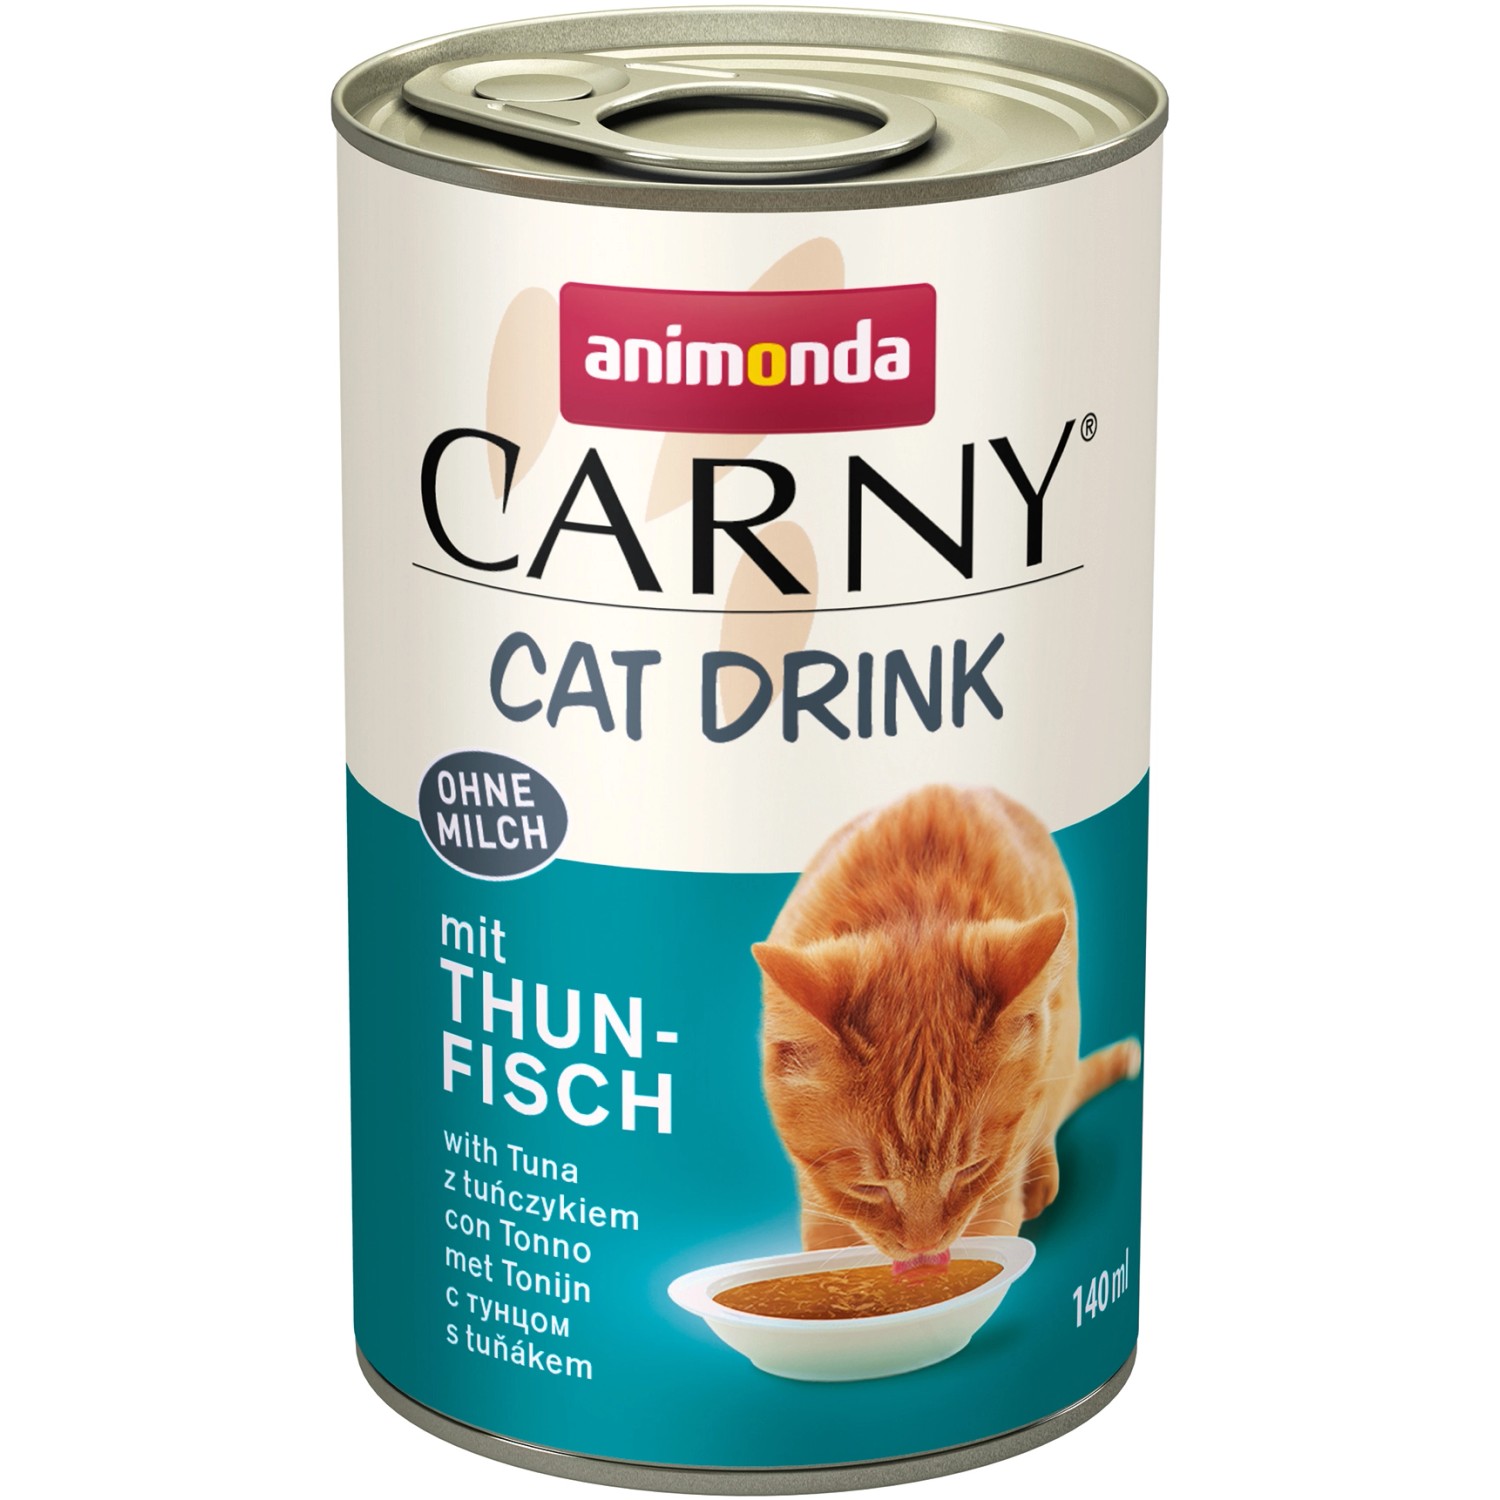 Carny Katzengetränk Cat Drink mit Thunfisch 140 ml